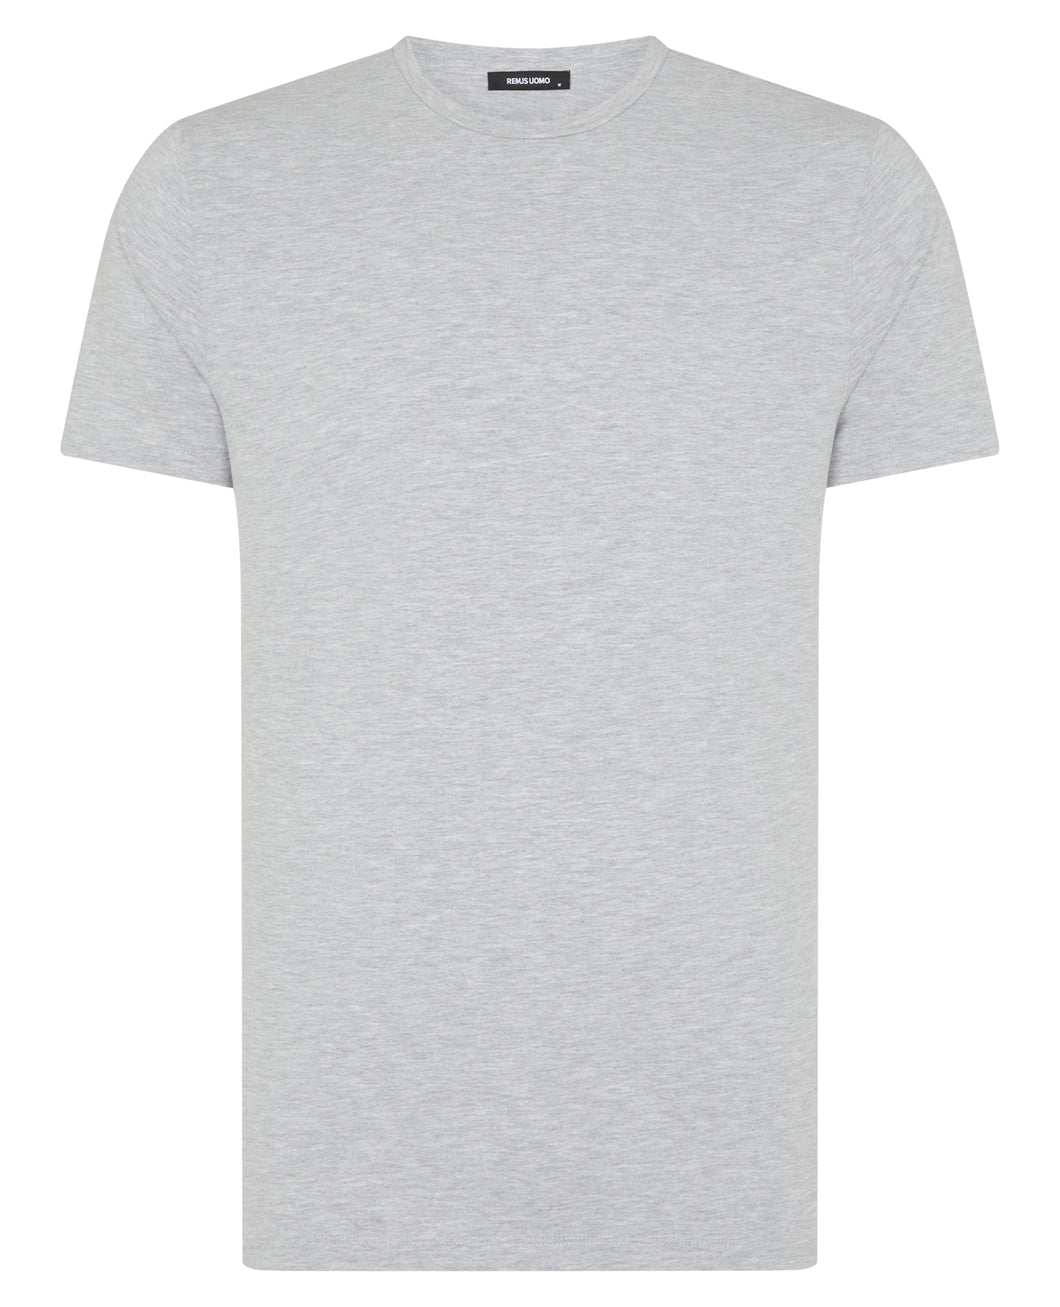 REMUS UOMO Stretch Cotton T Shirt in Light Grey Melange 133-53121